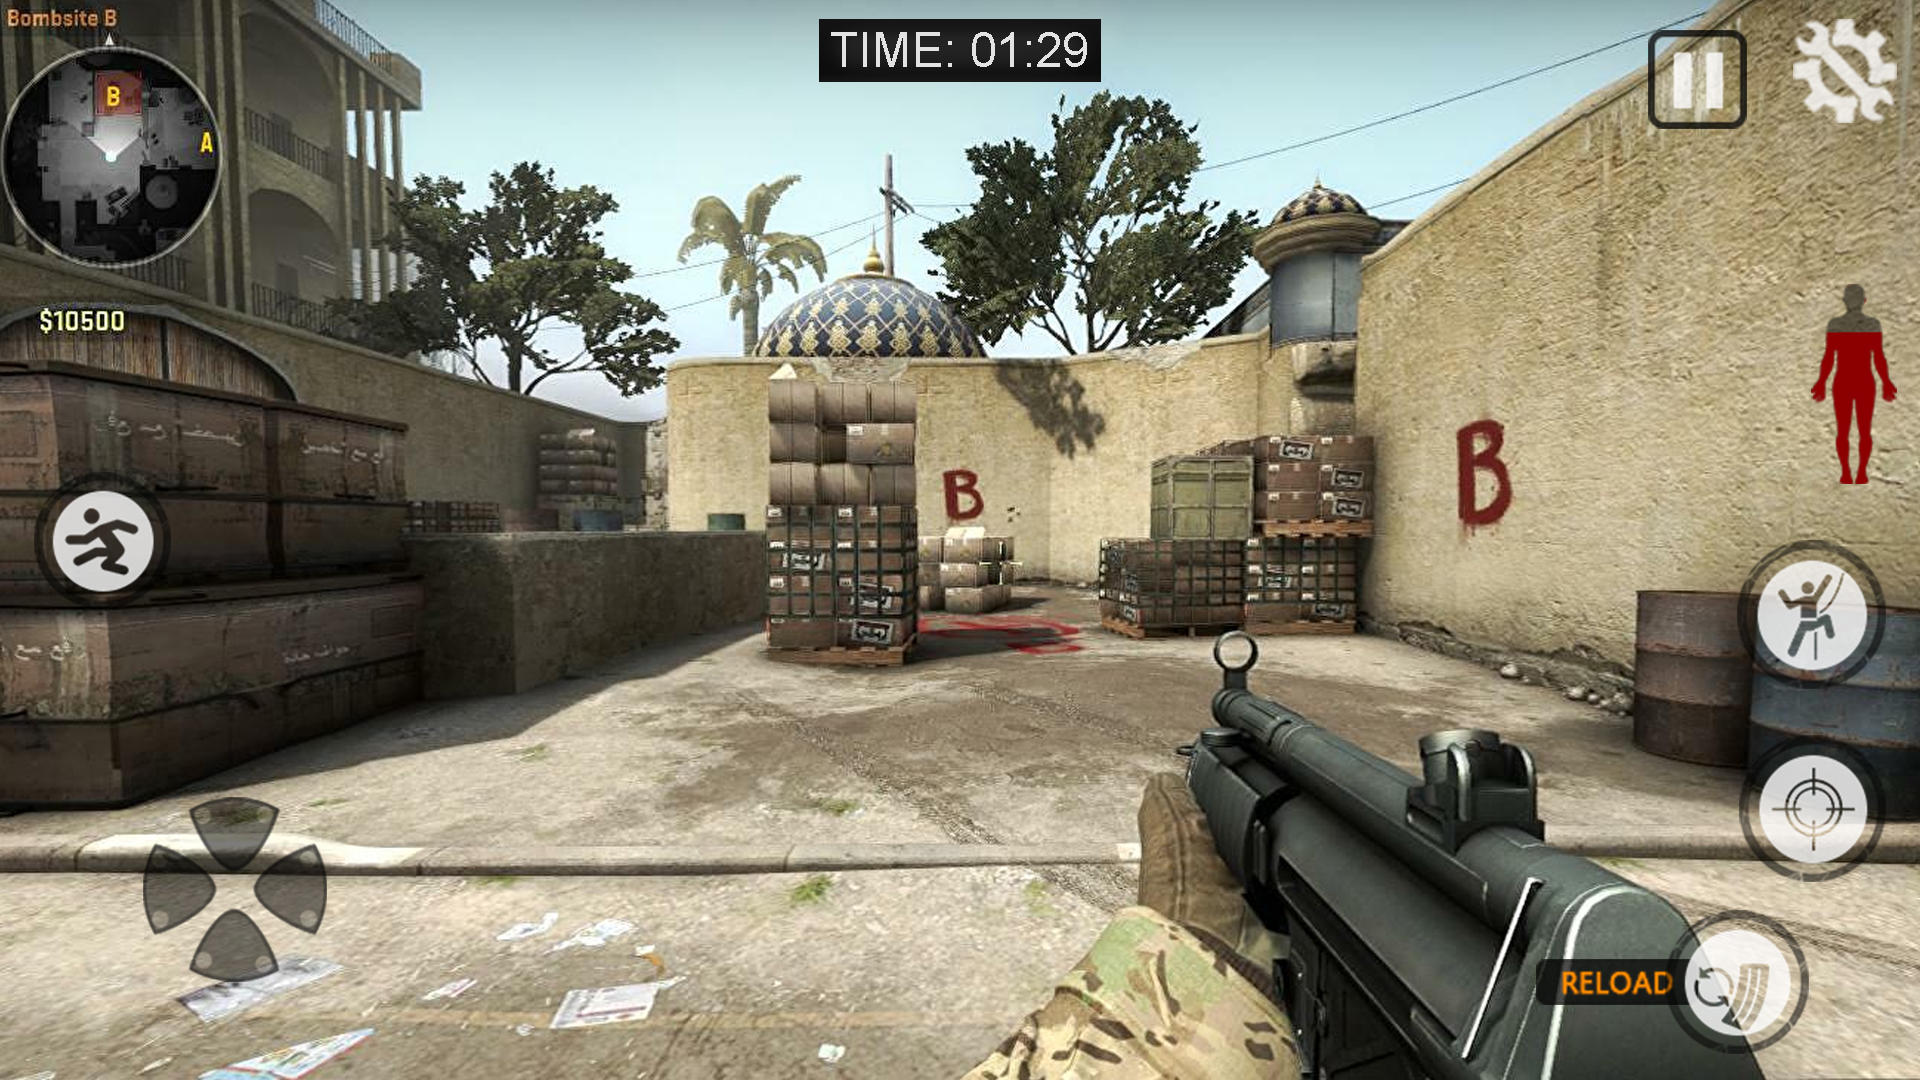 Screenshot 1 of Gun Shooting Games : FPS Games 1.0.1